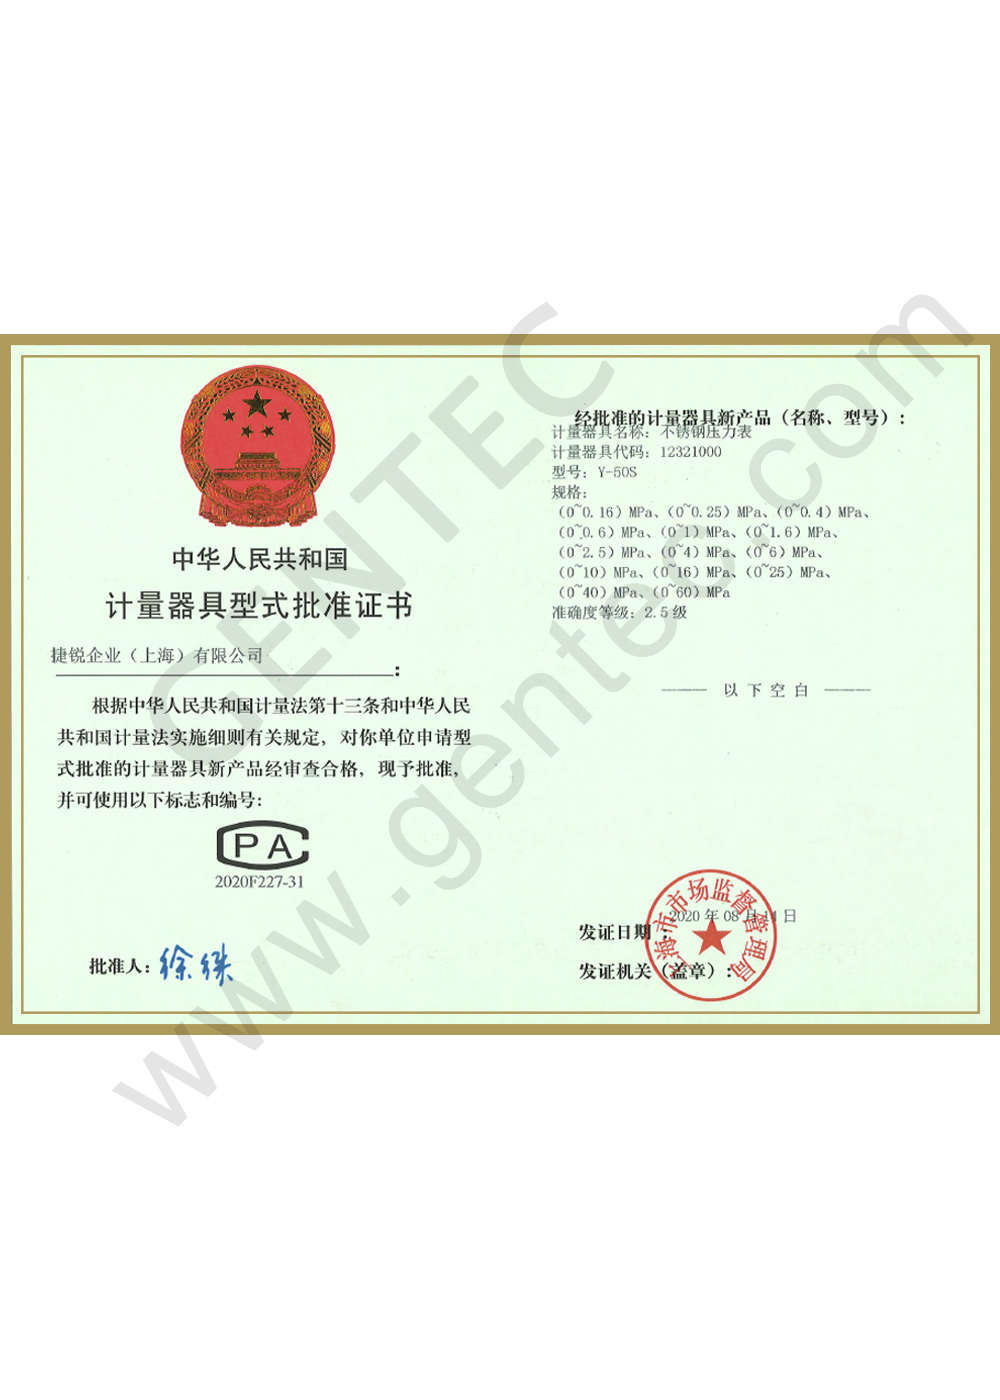 Approval Certificate (Y-50S）